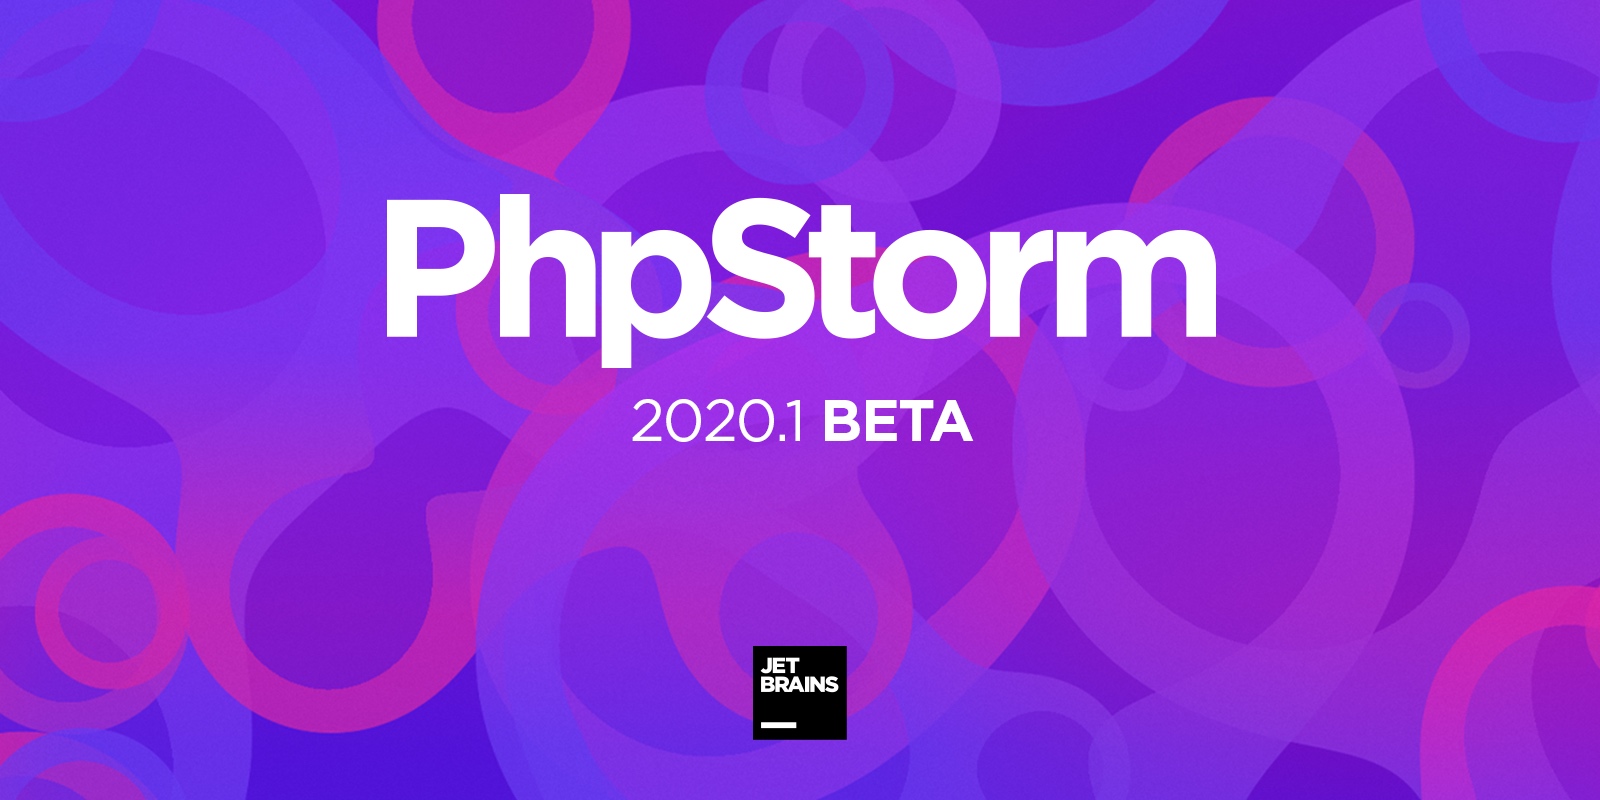 PhpStorm 2020.1 Beta